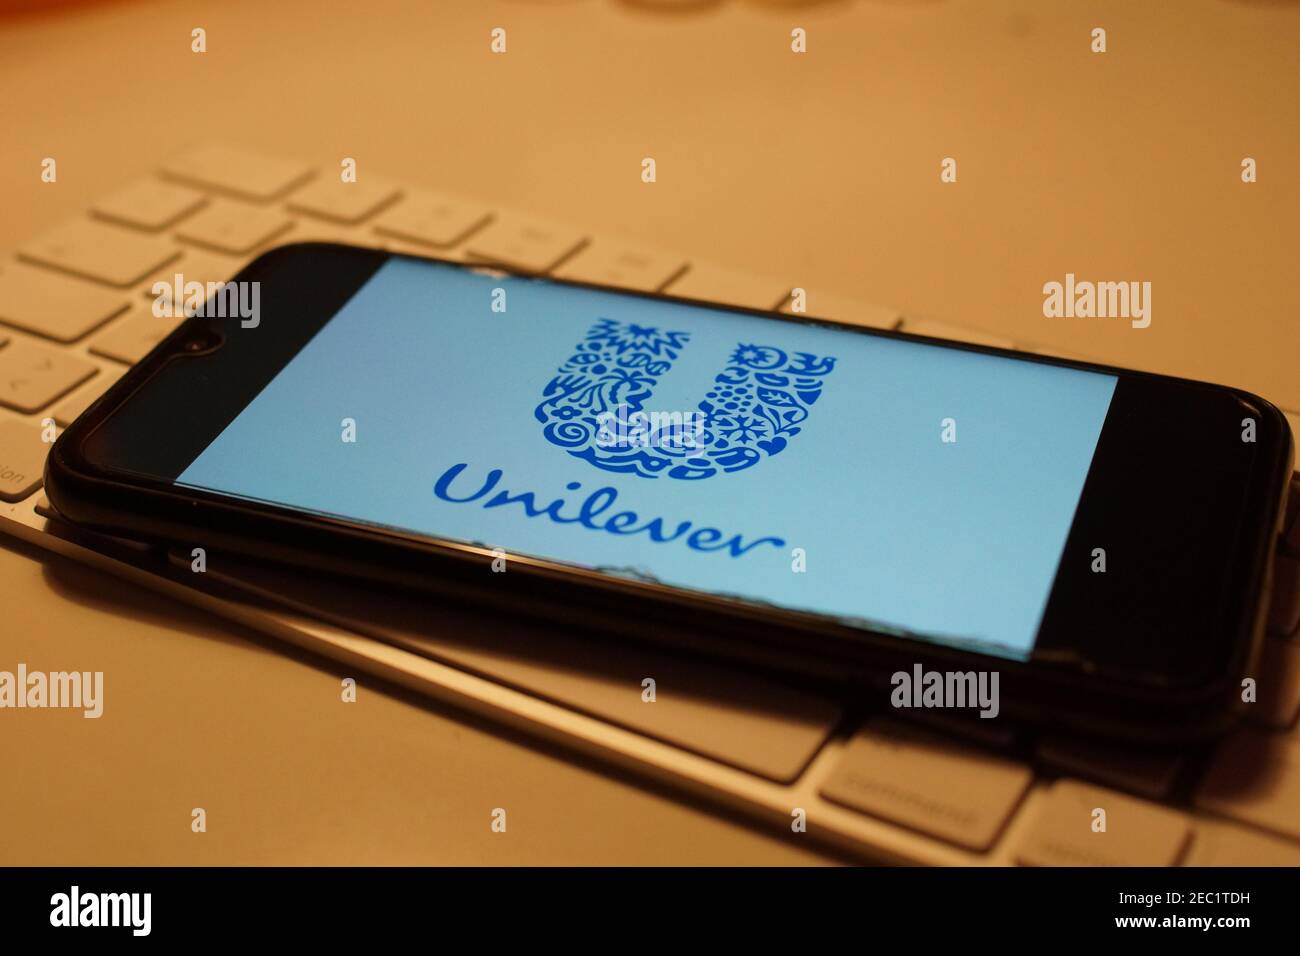 Smartphone with Unilever logo on computer keyboard Stock Photo